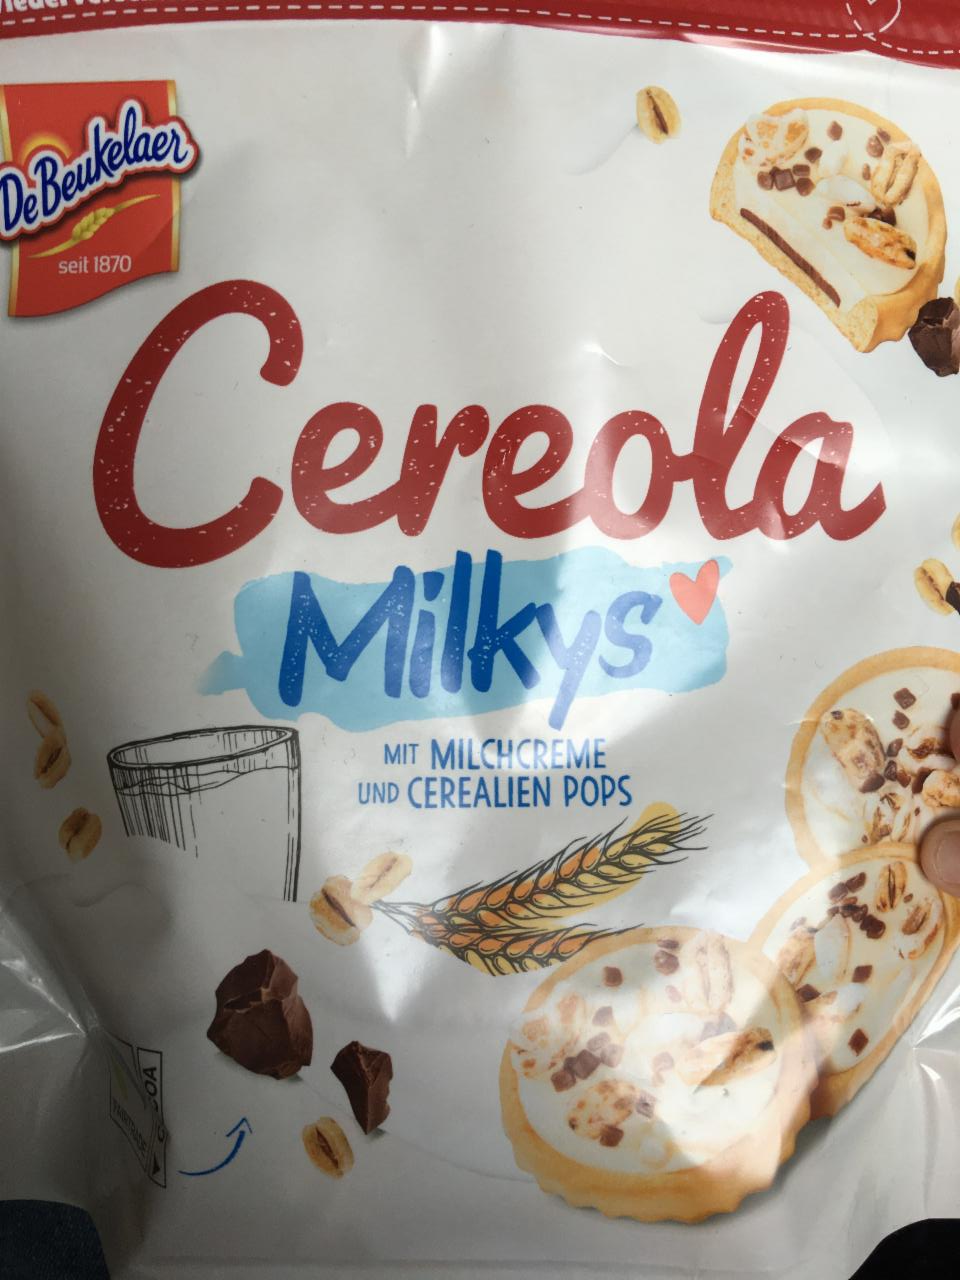 Fotografie - Cereola Milkys mit Milchcreme und Cerealien Pops DeBeukelaer